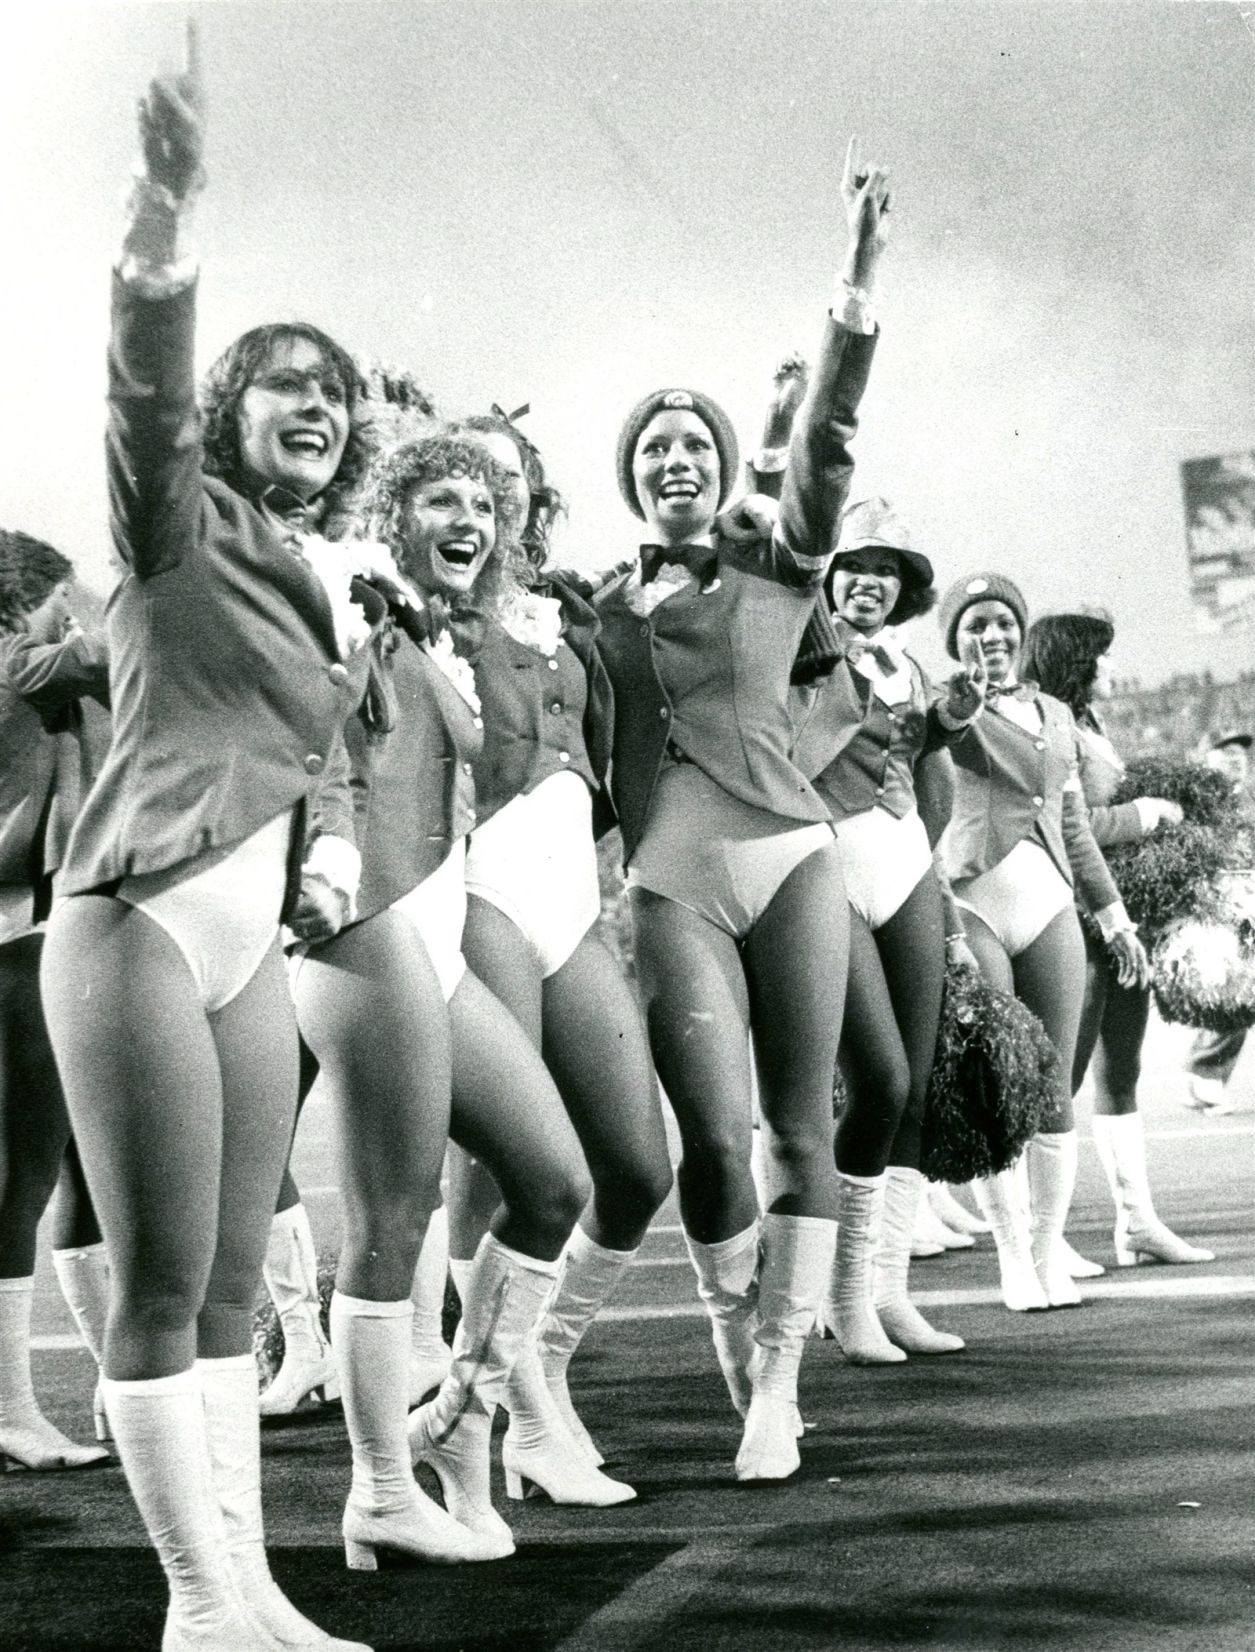 1978 playboy photox nfl cheerleaders